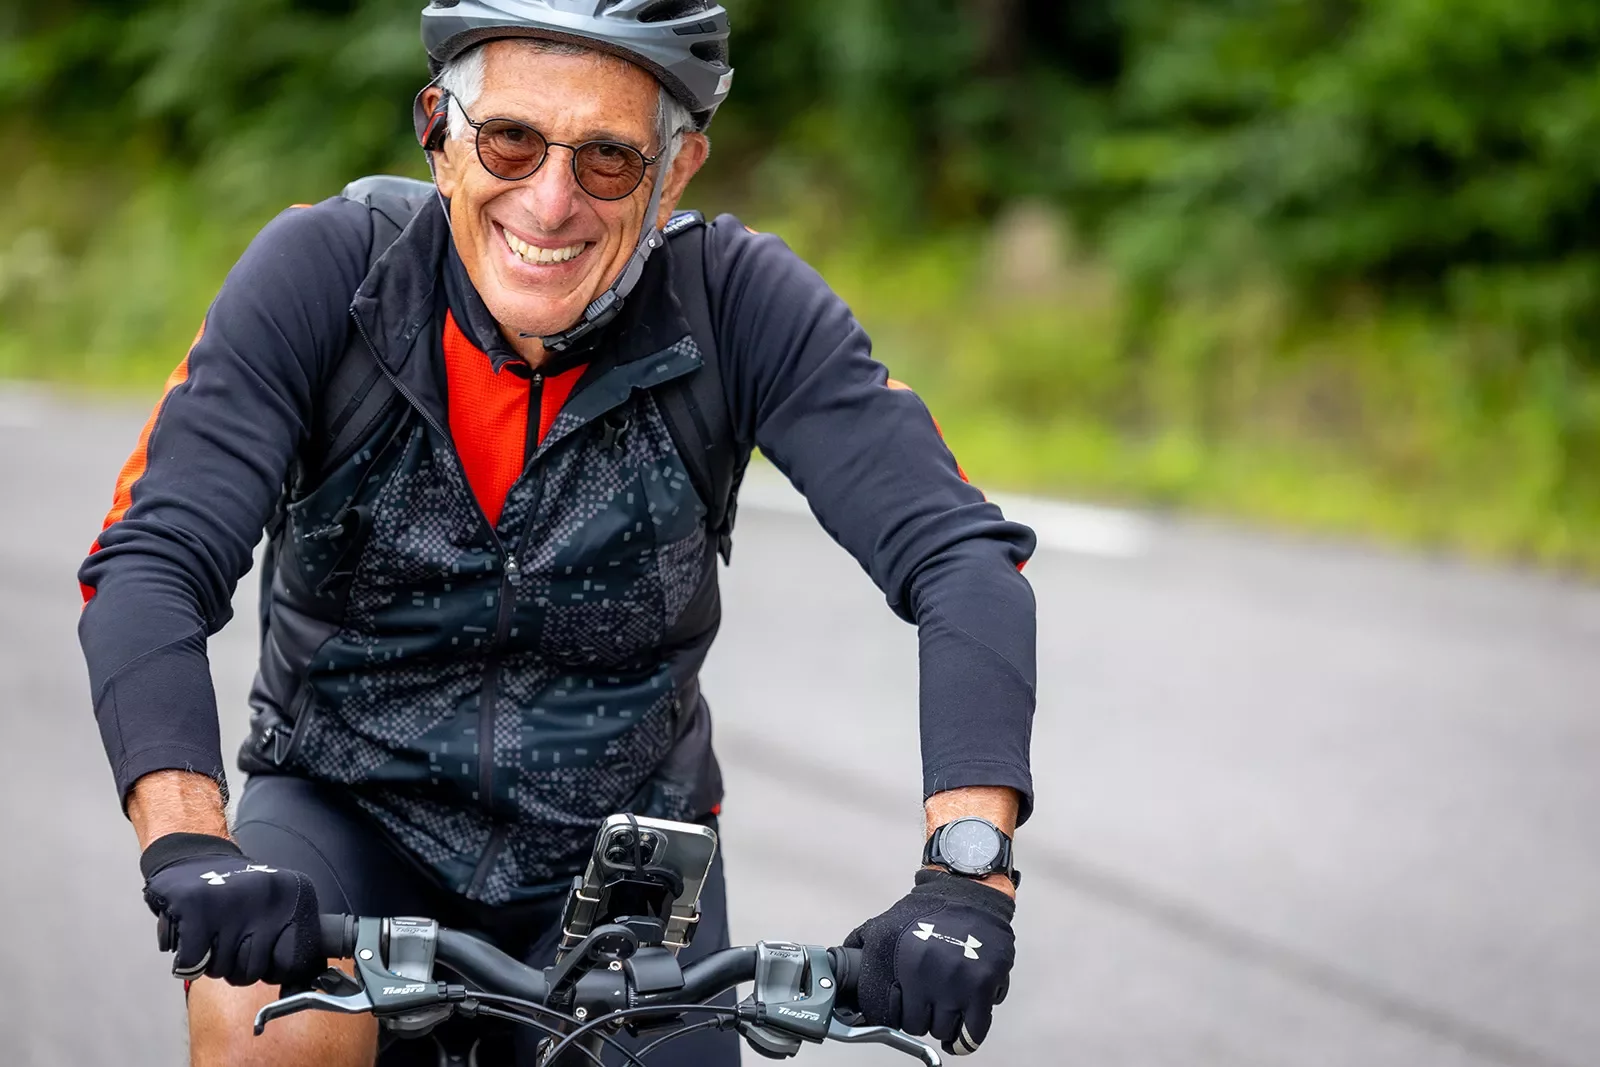 Older biker smiling while riding.